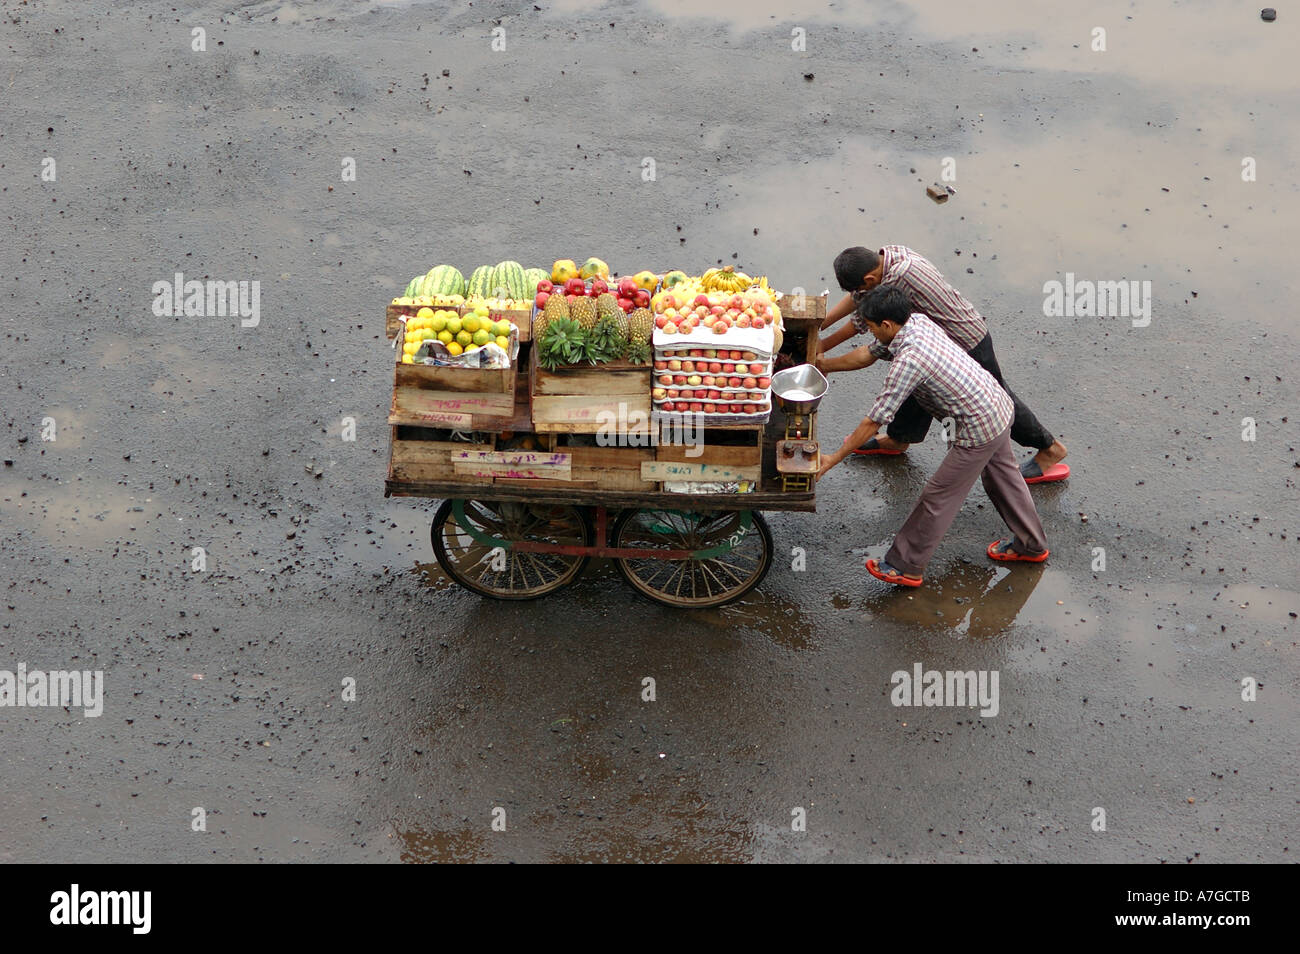 PKB77872 indische Hersteller Obst Verkäufer drängen seinen Wagen im Monsun in Bombay jetzt Mumbai, Maharashtra, Indien Stockfoto